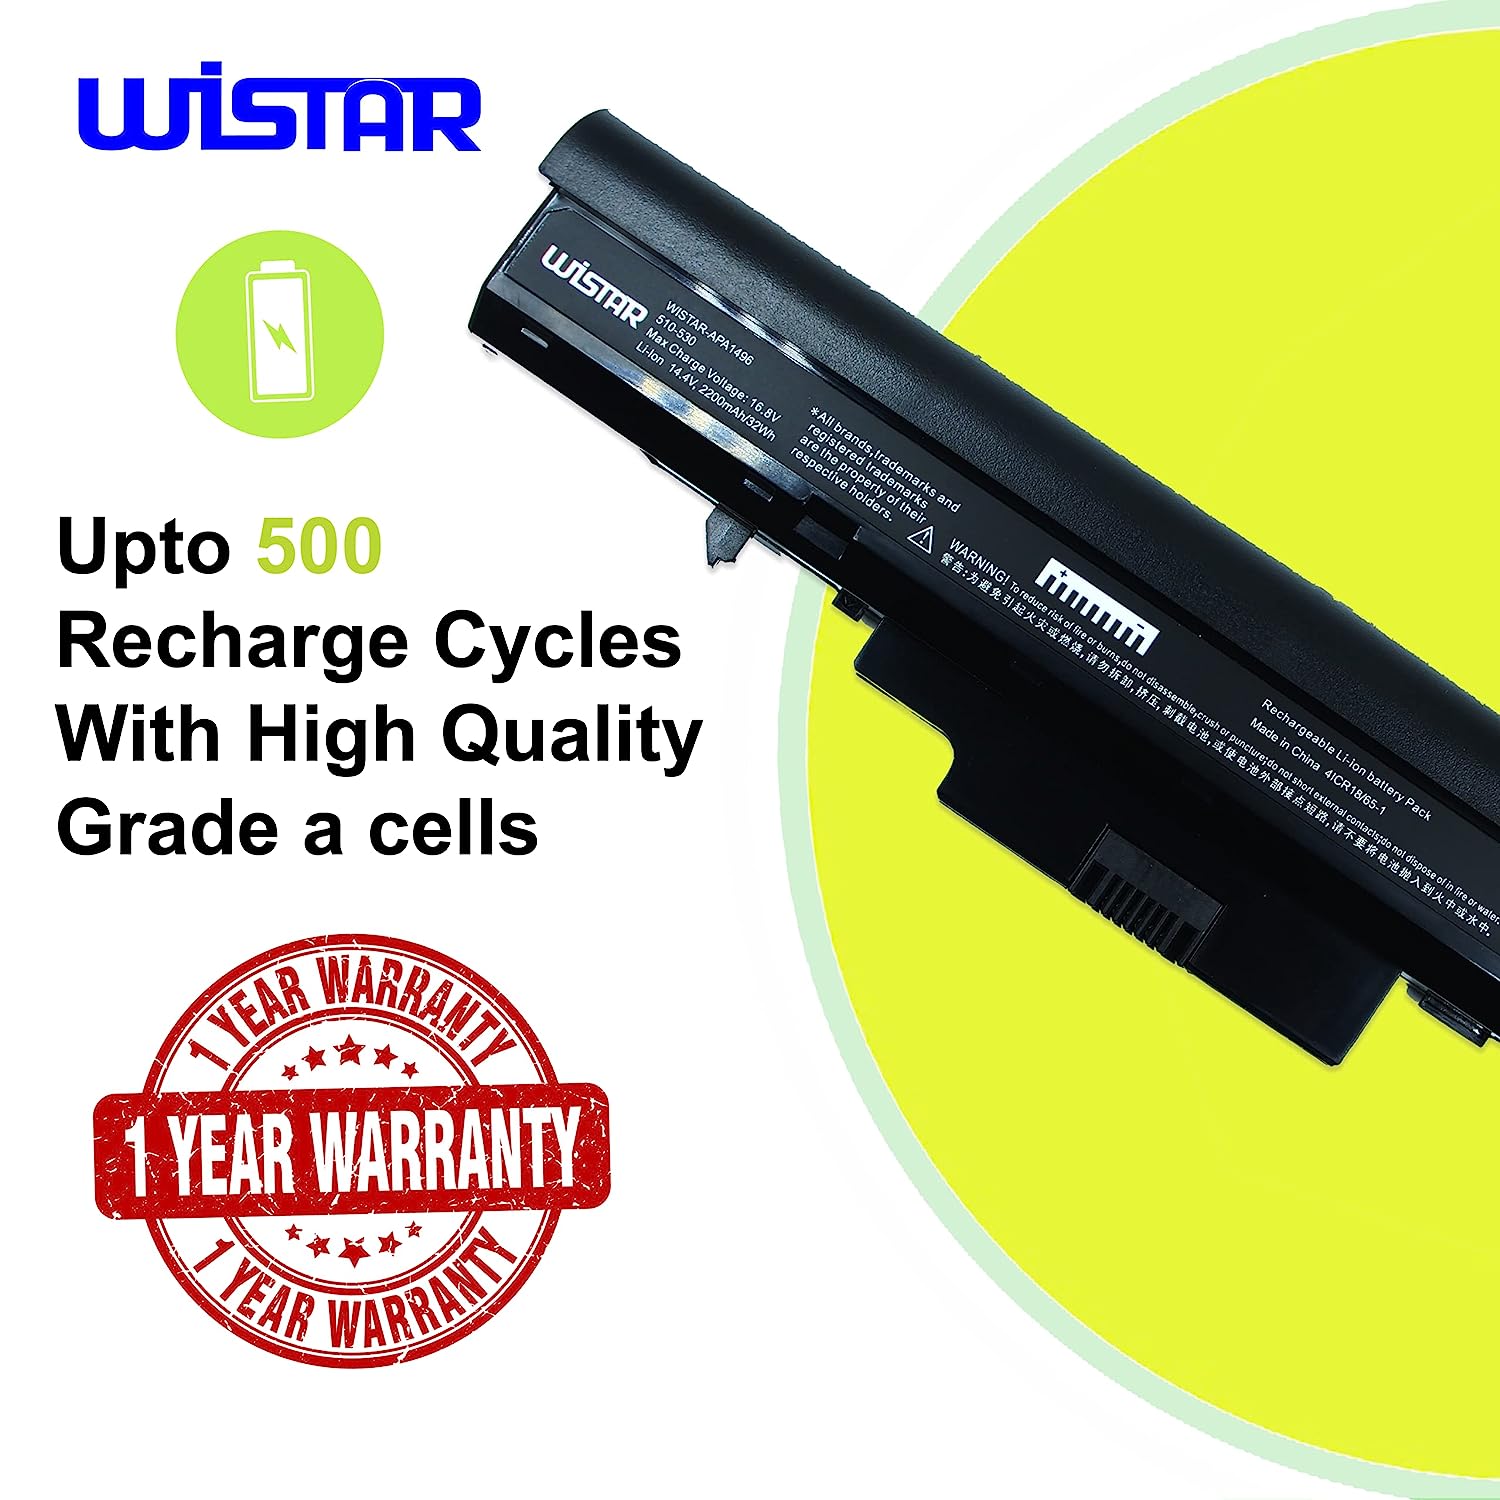 WISTAR Laptop Battery Compatible for HP 510 530, P/No. 440264-ABC 440266-ABC 440704-001 443063-001 441674-001 RW557AA HSTNN-IB44 HSTNN-C29C